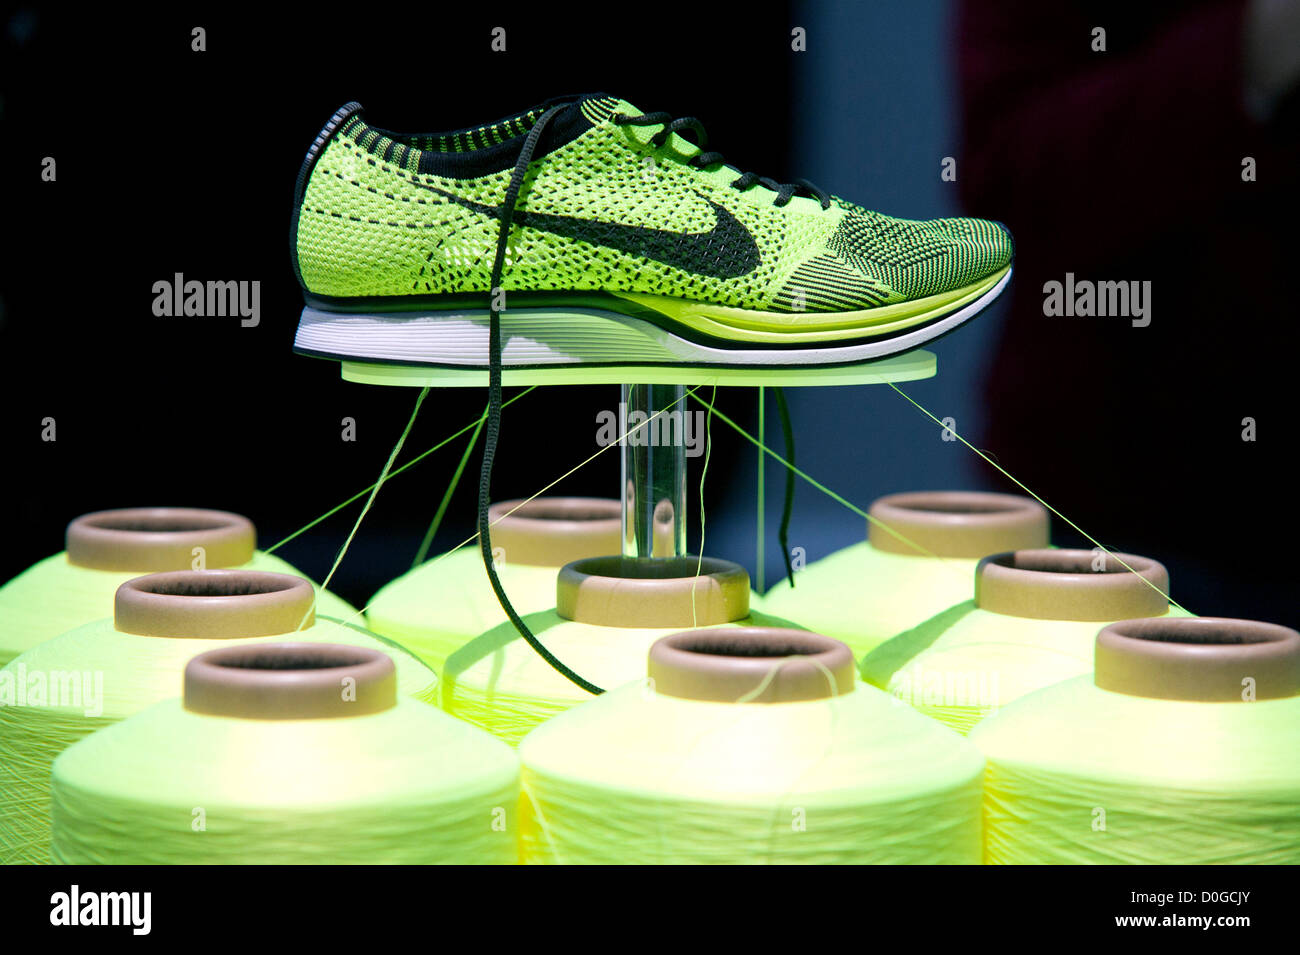 new nike running shoe technology